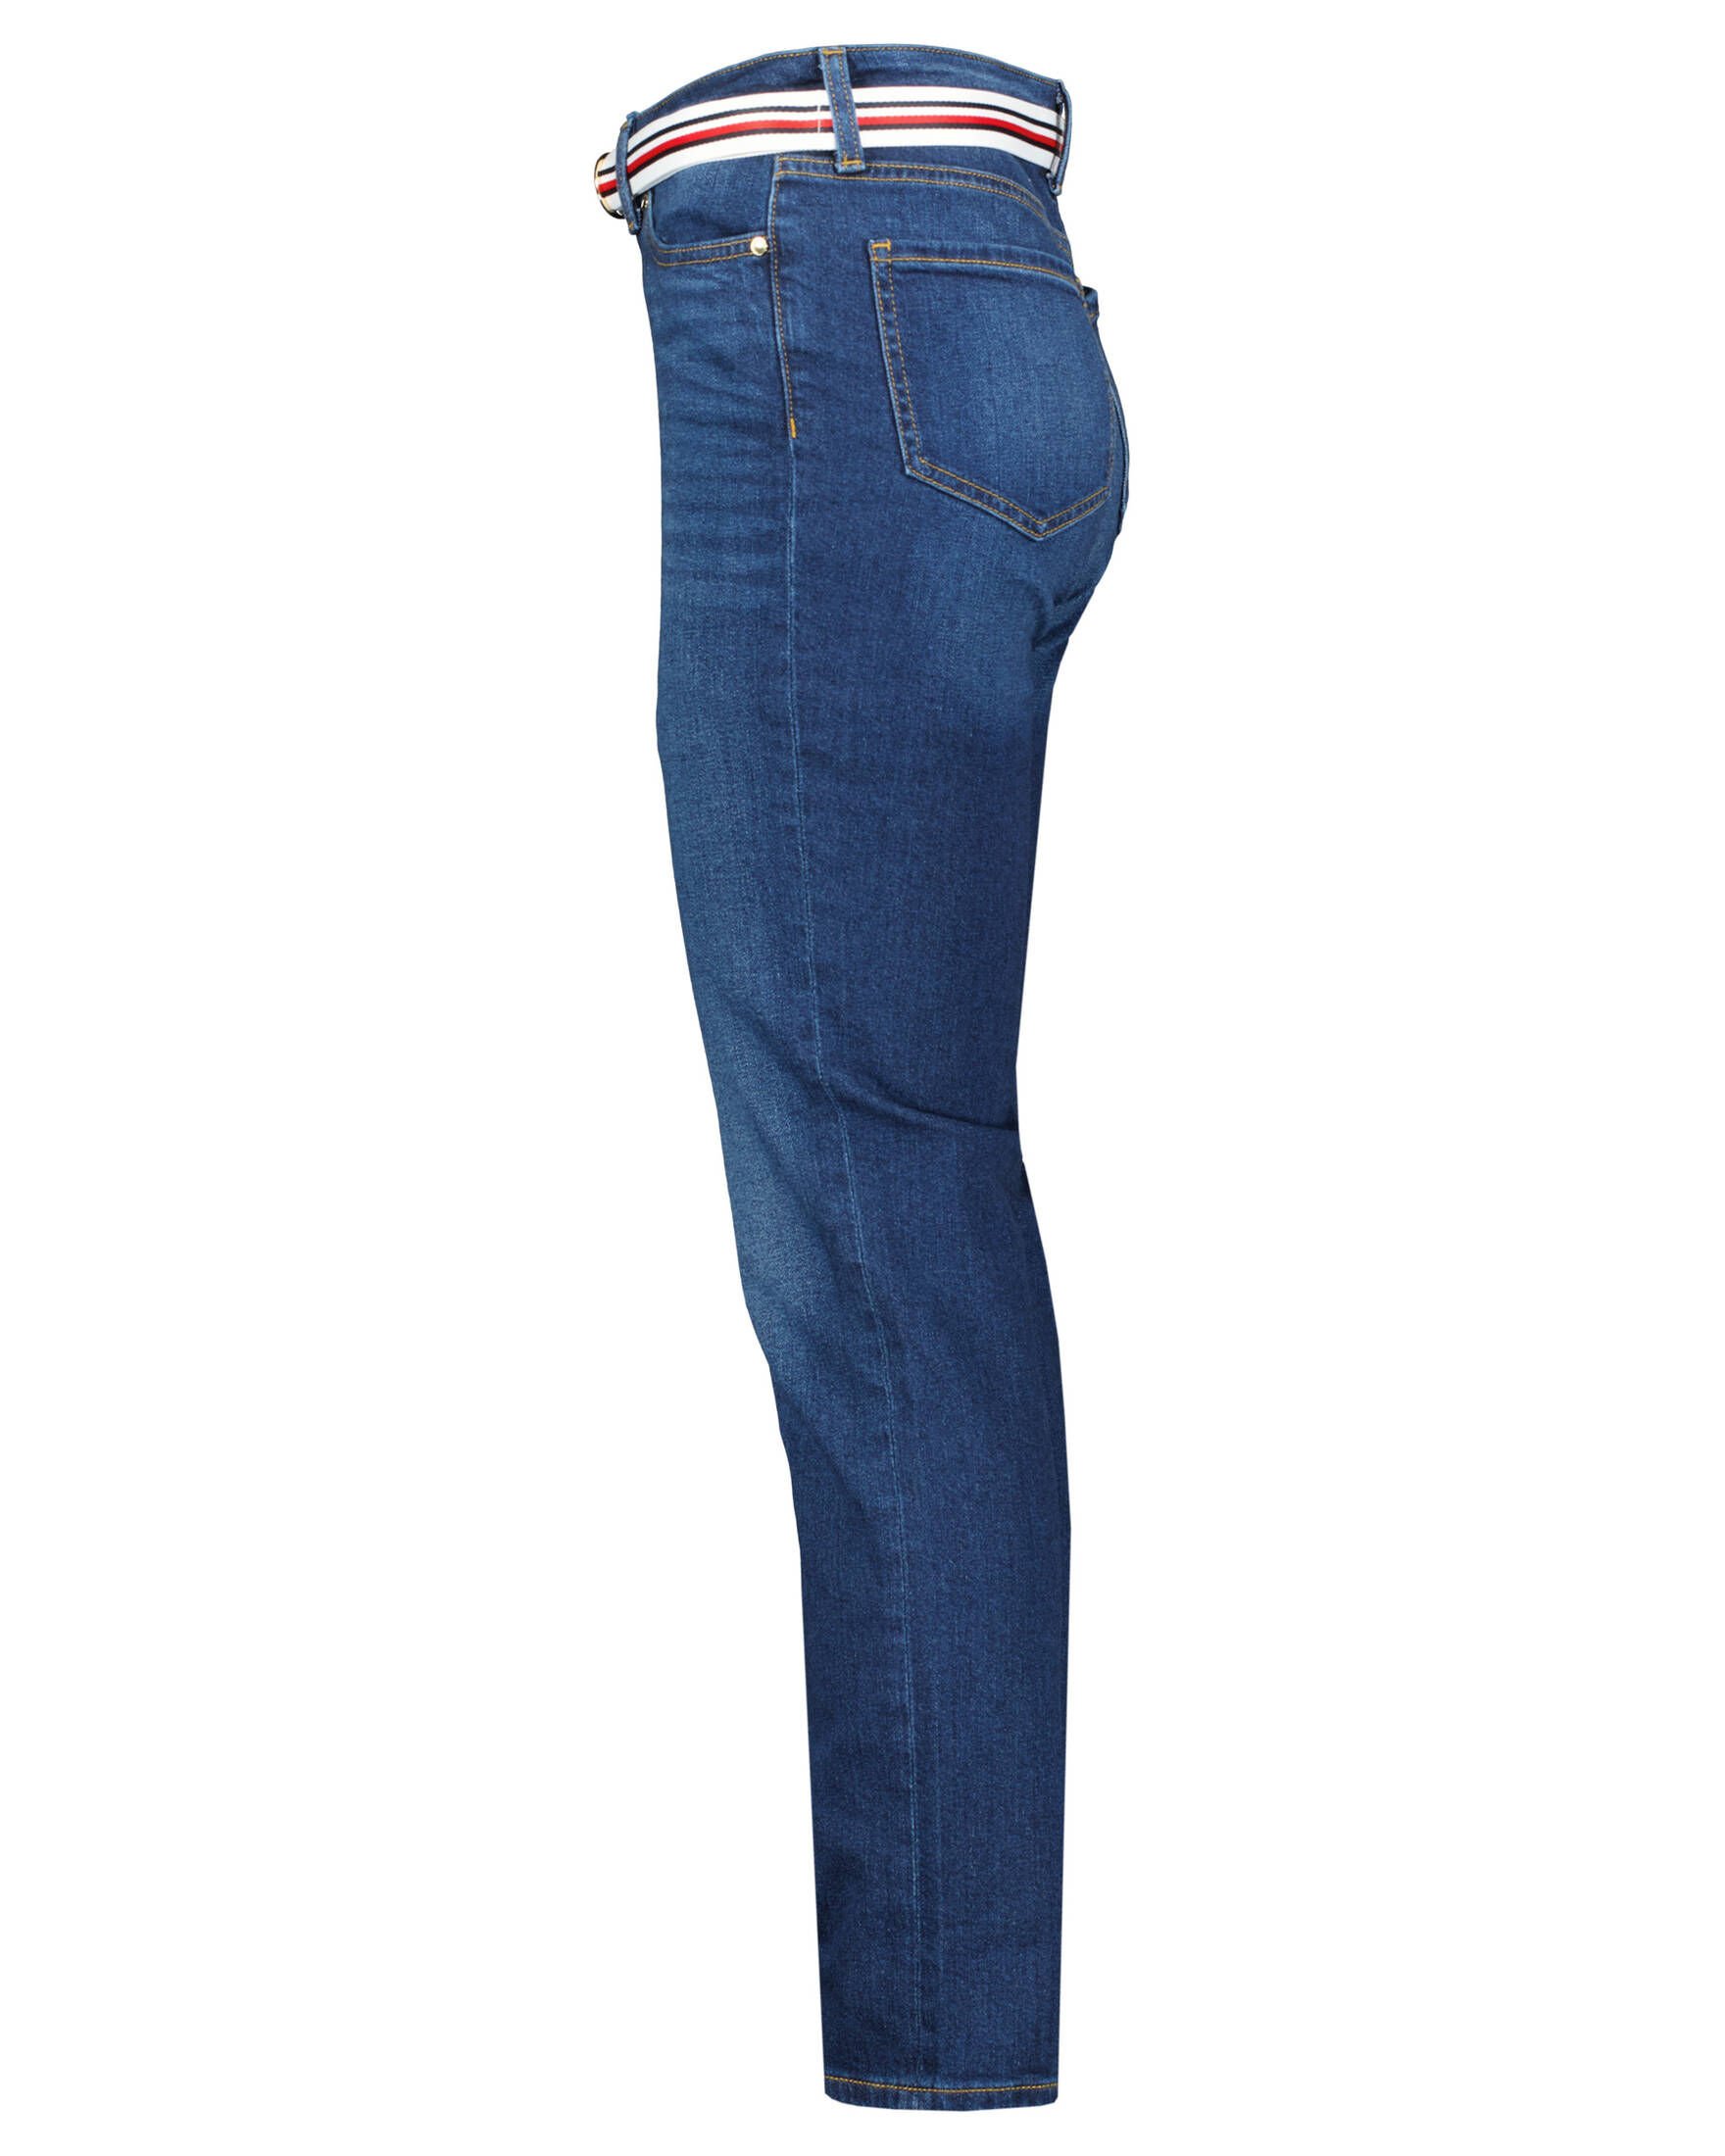 Lily Saks resultat Tommy Hilfiger Damen Jeans Straight Fit kaufen | engelhorn